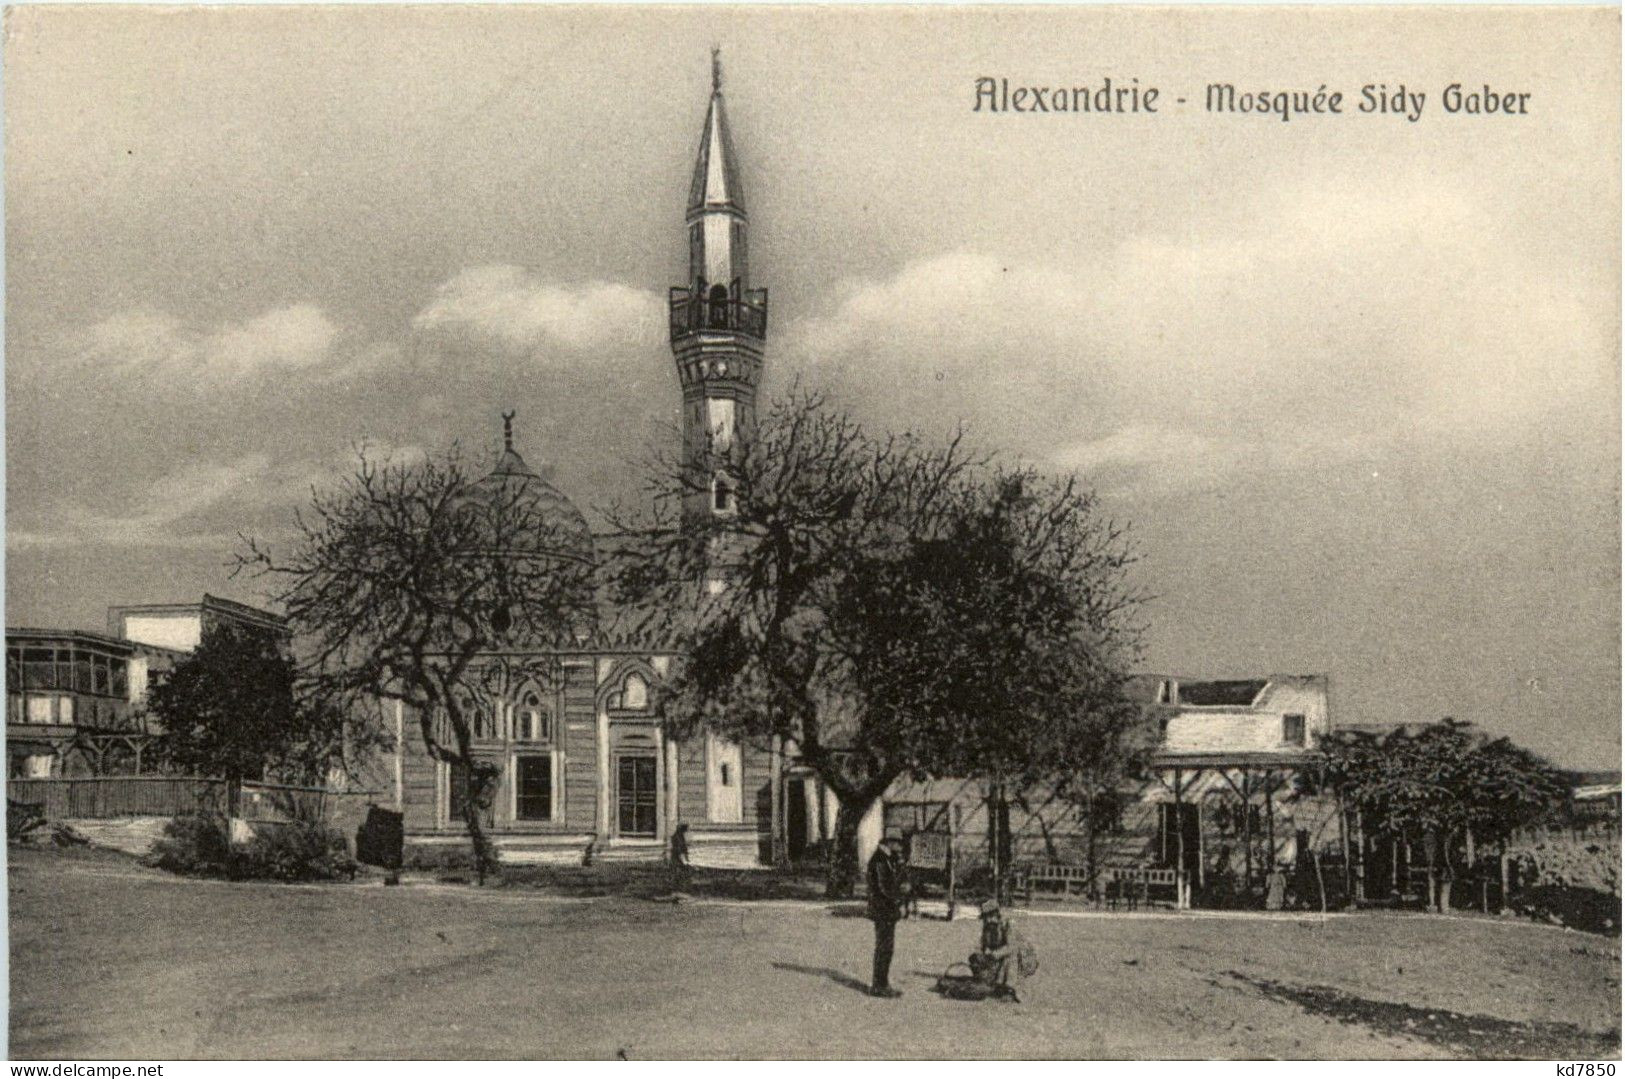 Alexandria - Mosquee Sidy Gaber - Alexandrie